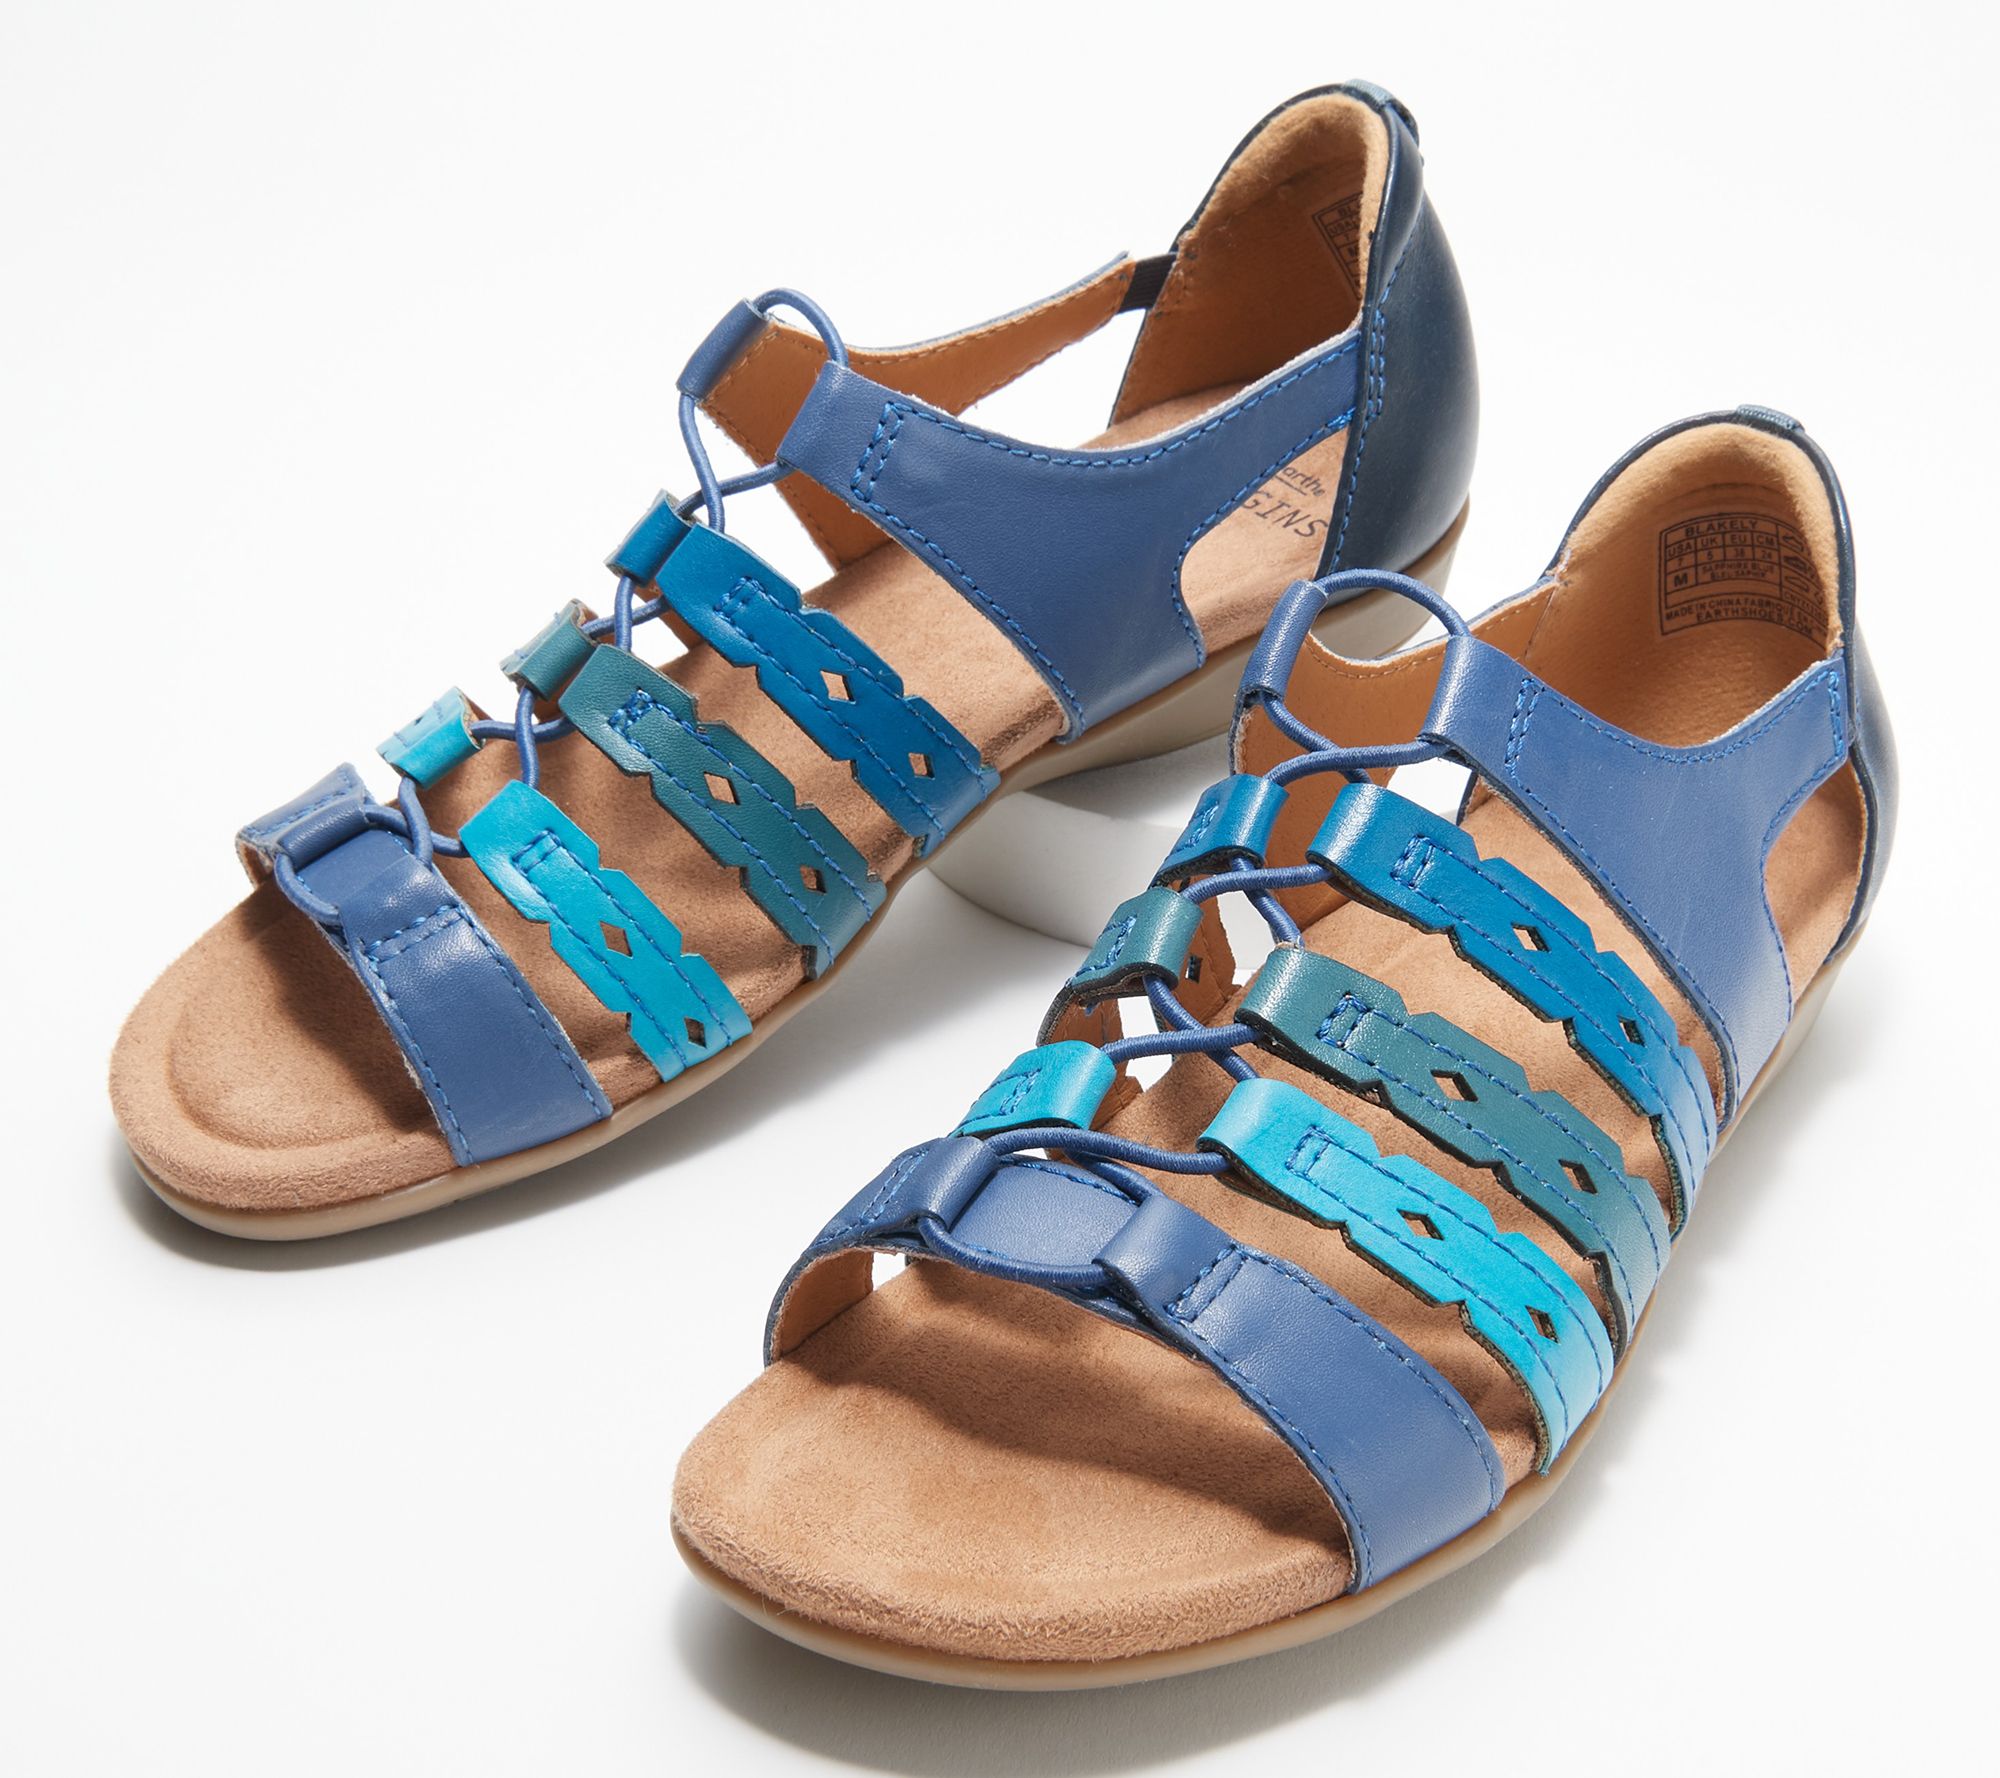 Gladiator leather sandals women sandals summer sandals outdoor leather sandals,gift for her.